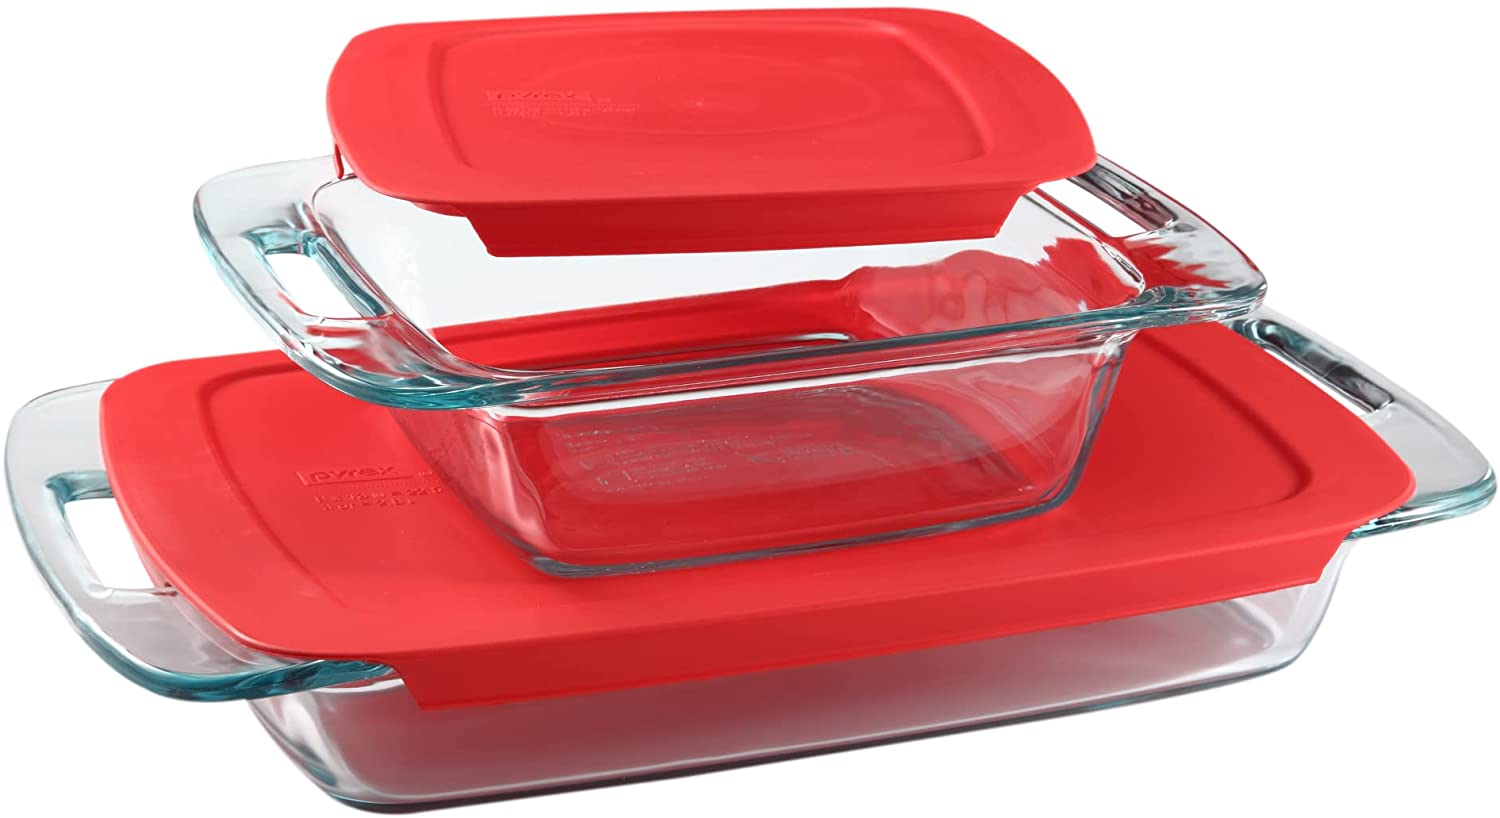 Pyrex Non-Stick Dishwasher Safe Glass Bakeware Set, 4-Piece